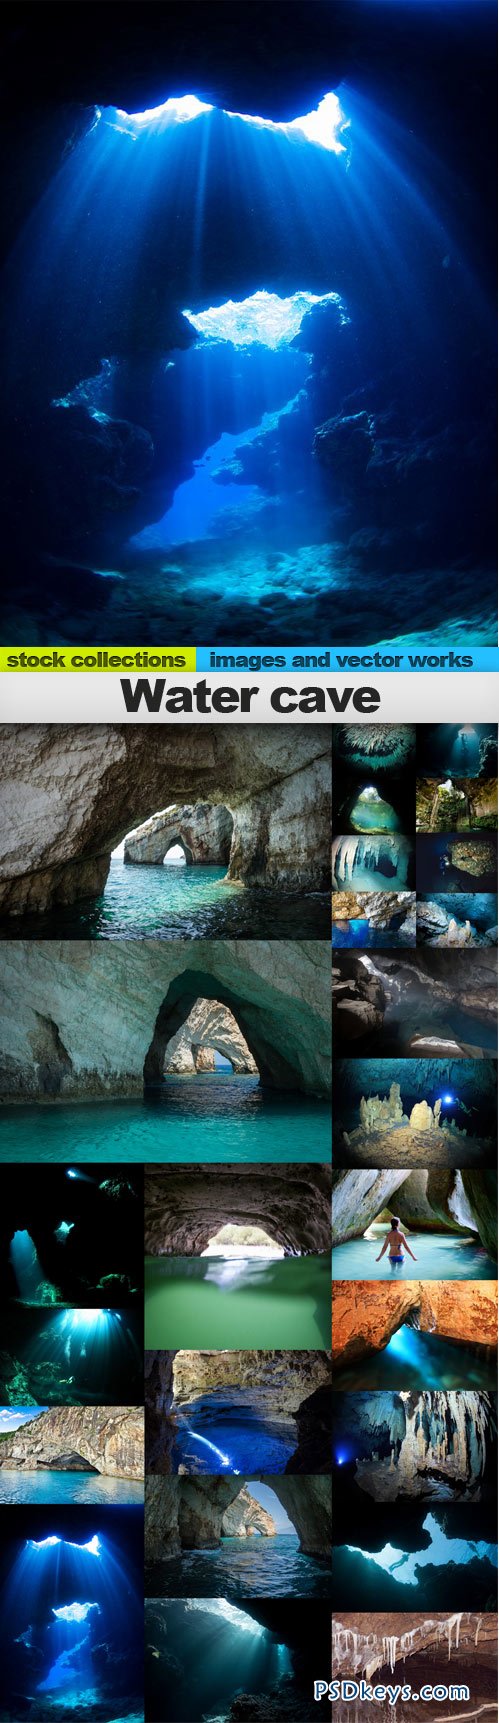 Water cave 25xUHQ JPEG